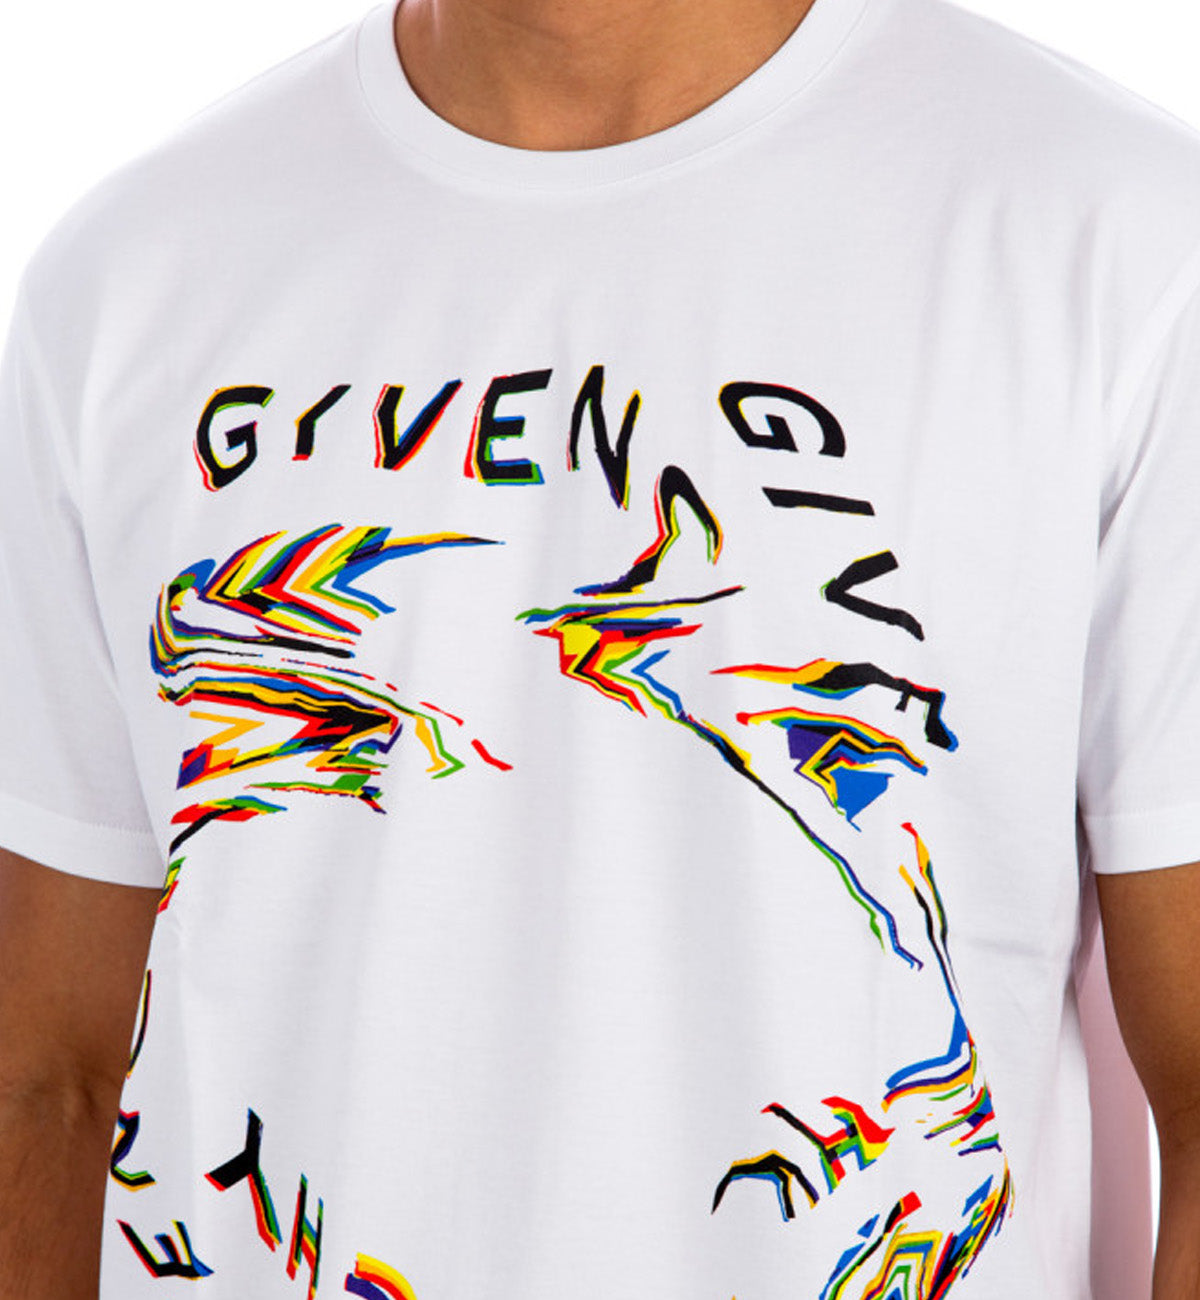 Givenchy Glitch Printed T-Shirt (White)